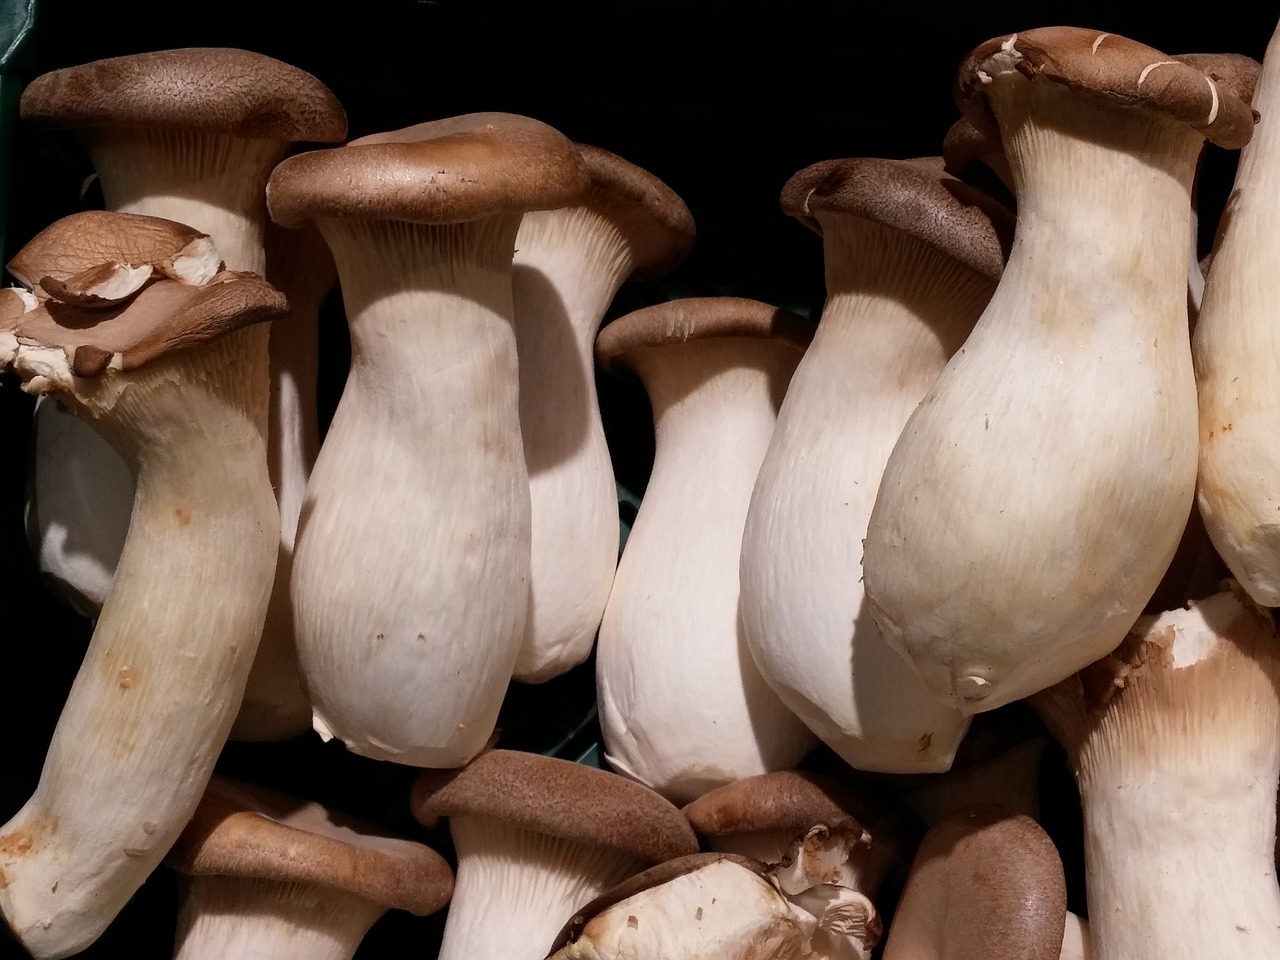 Seongi Beoseot – King Oyster Mushroom